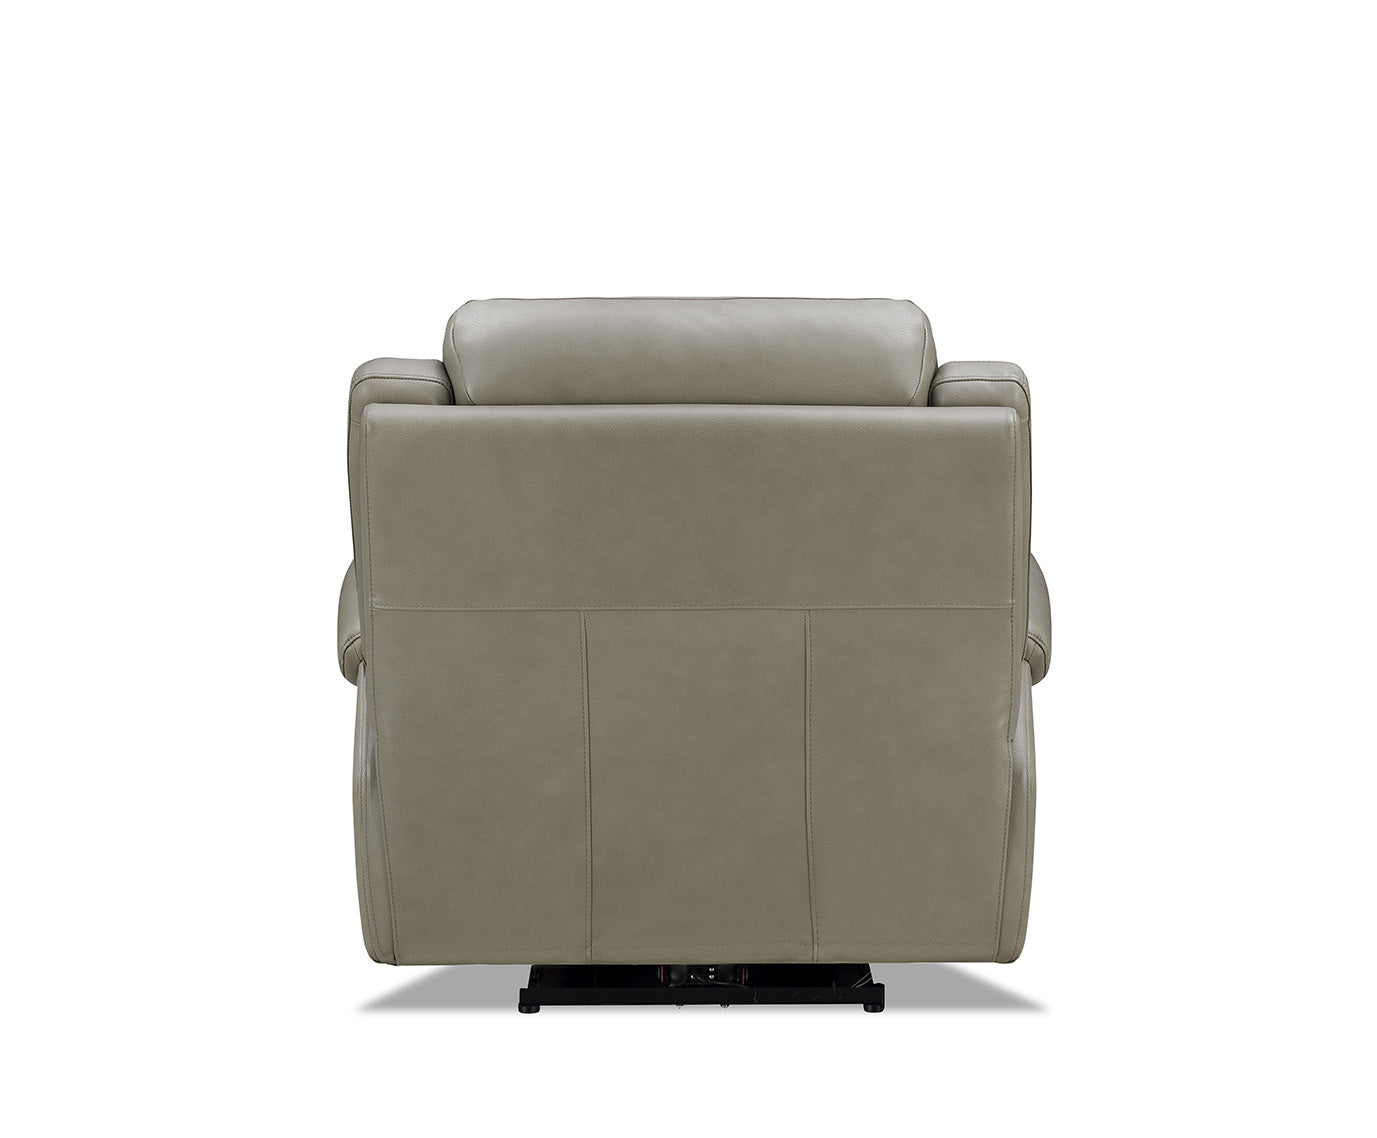 Versailles Leather Armchair with Power Recliner & Adjustable Headrest